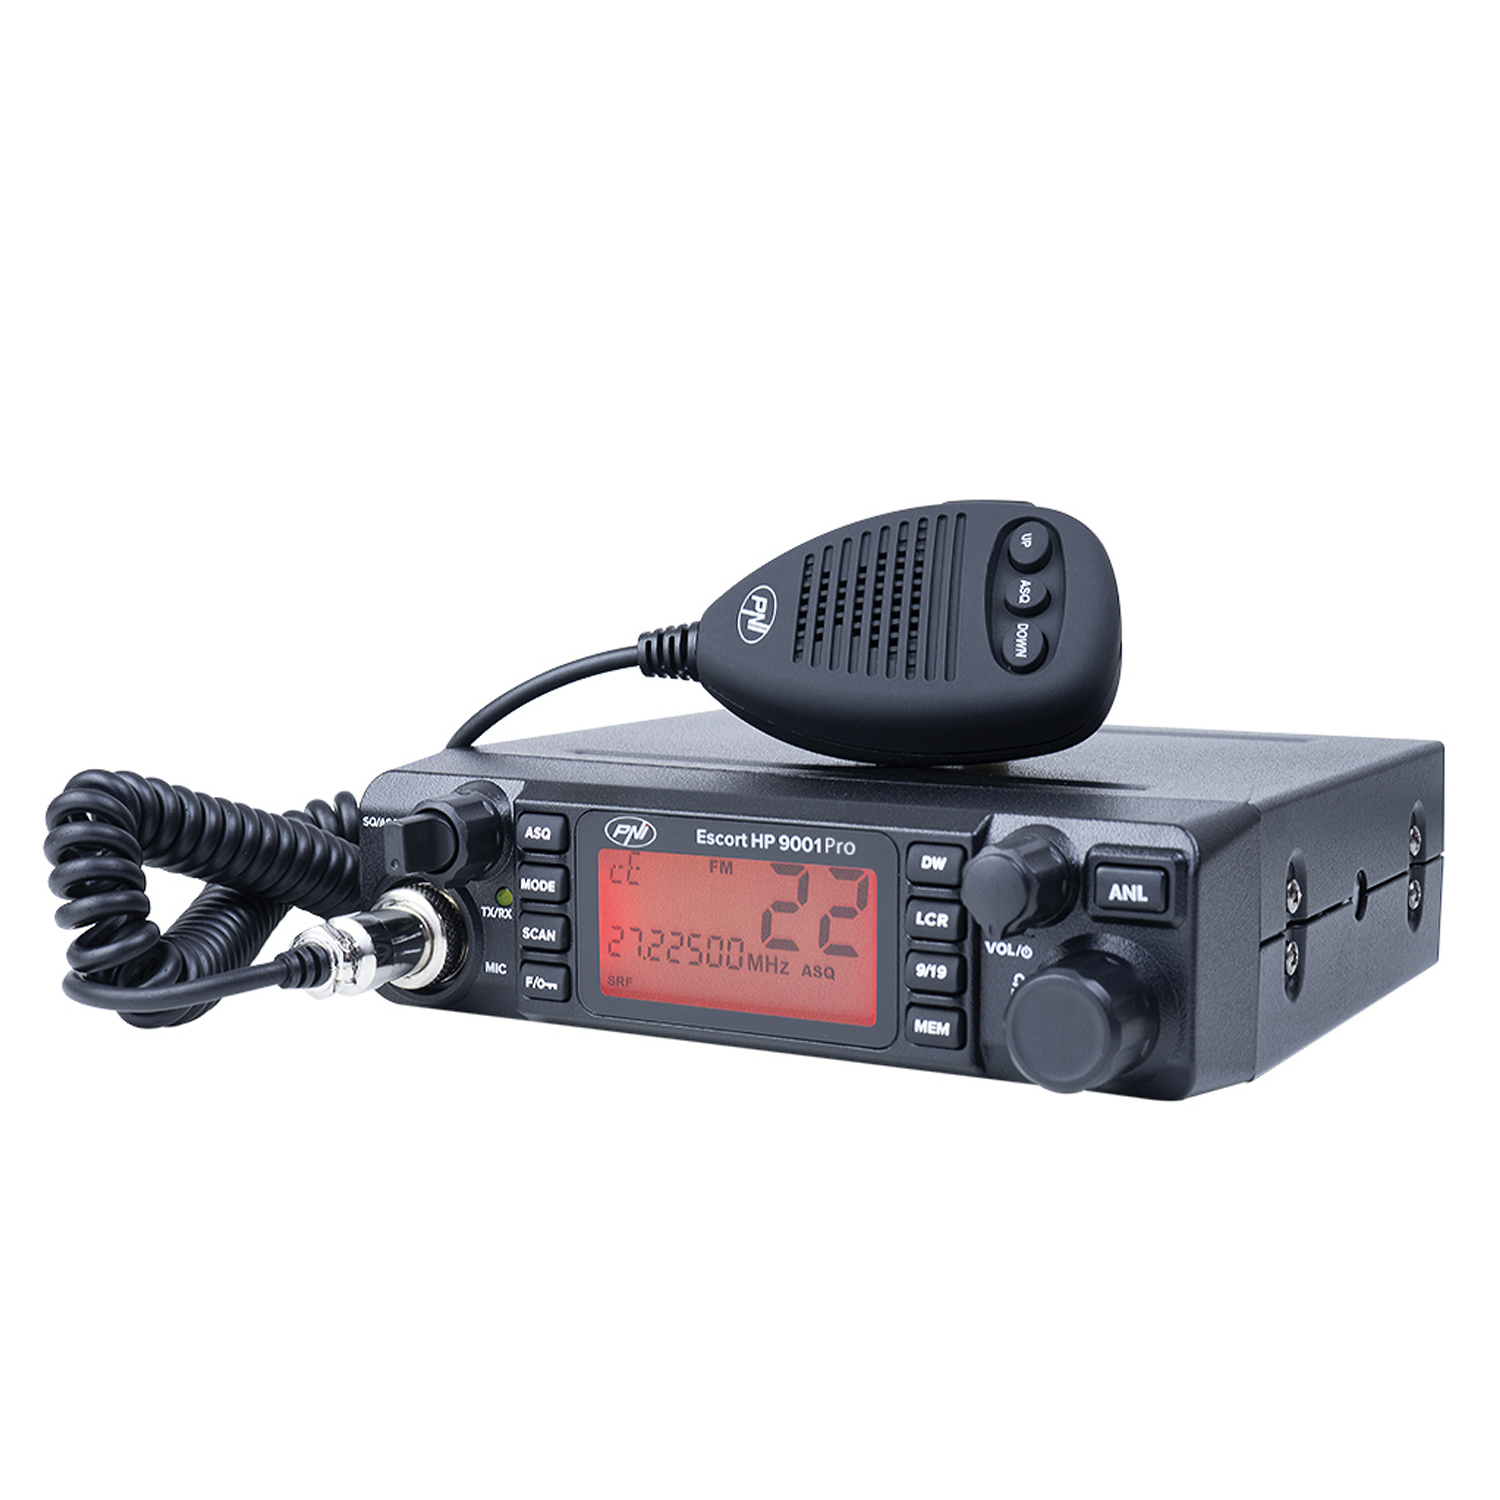 Escort CB-Funkgerät HP 9001 Radio, FM, PNI AM, Black